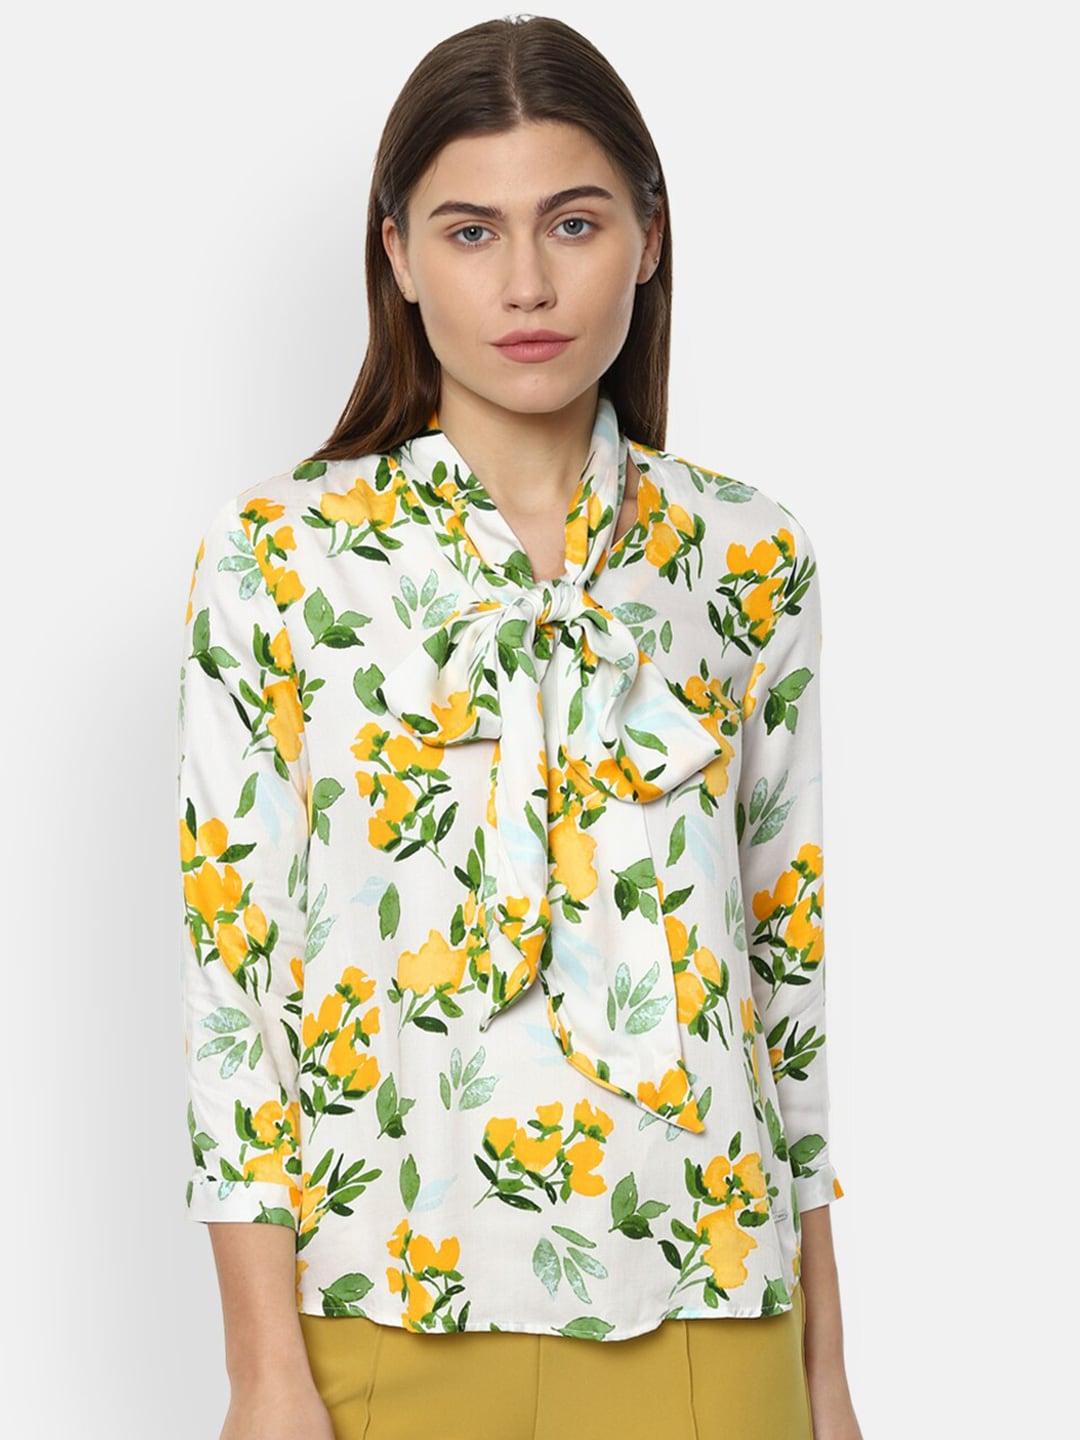 Van Heusen Woman White & Yellow Floral Print Tie-Up Neck Top